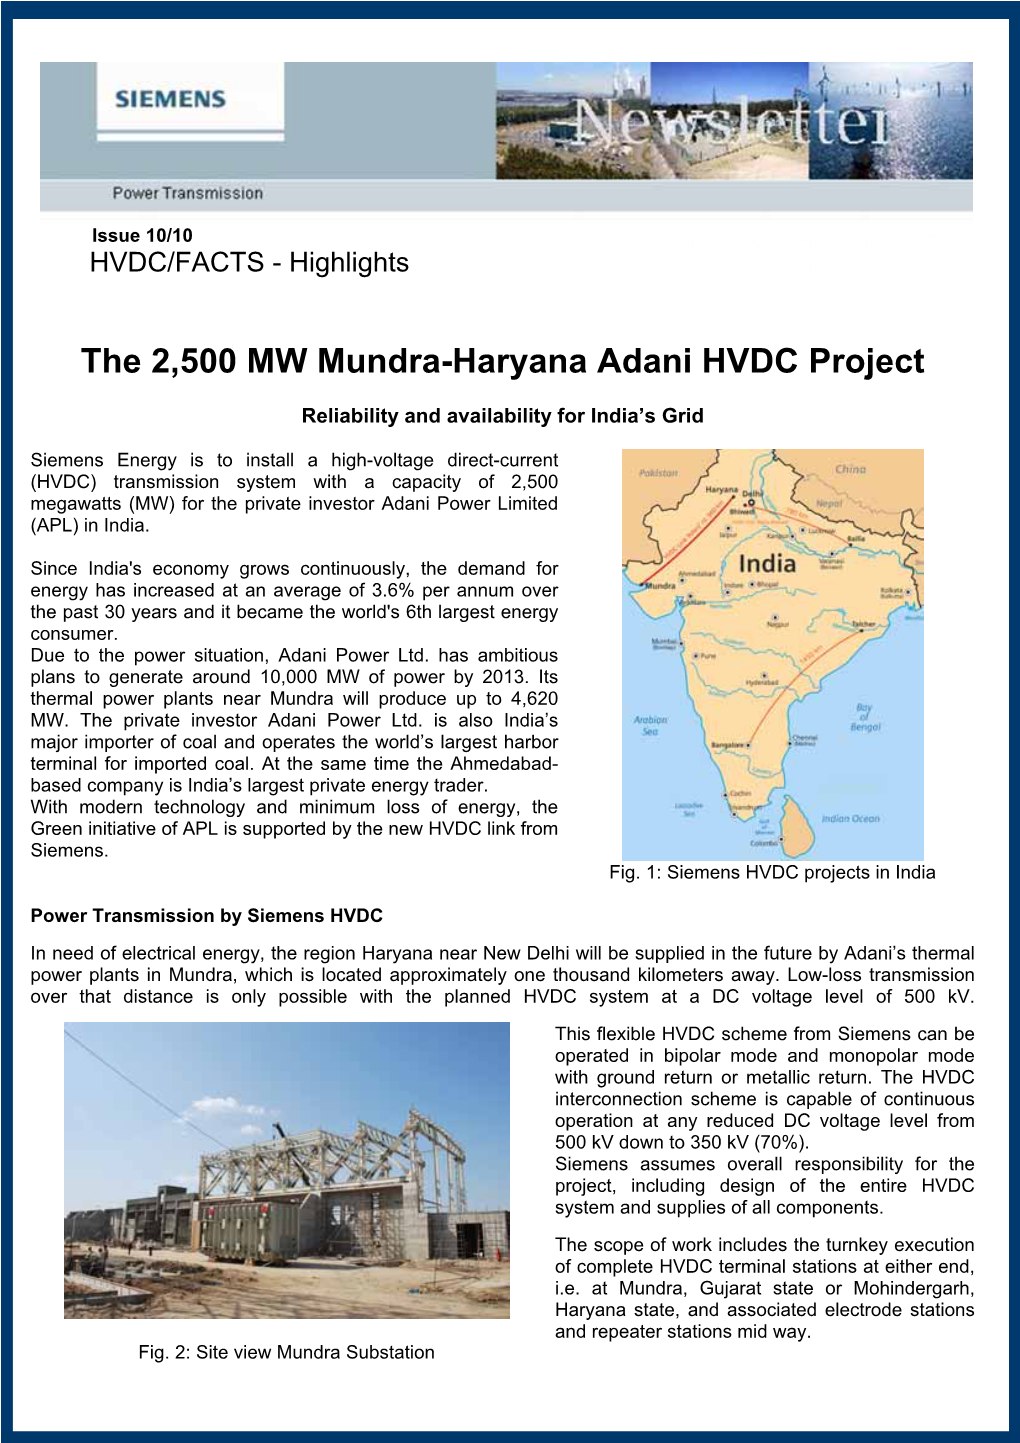 The 2500 MW Mundra-Haryana Adani HVDC Project